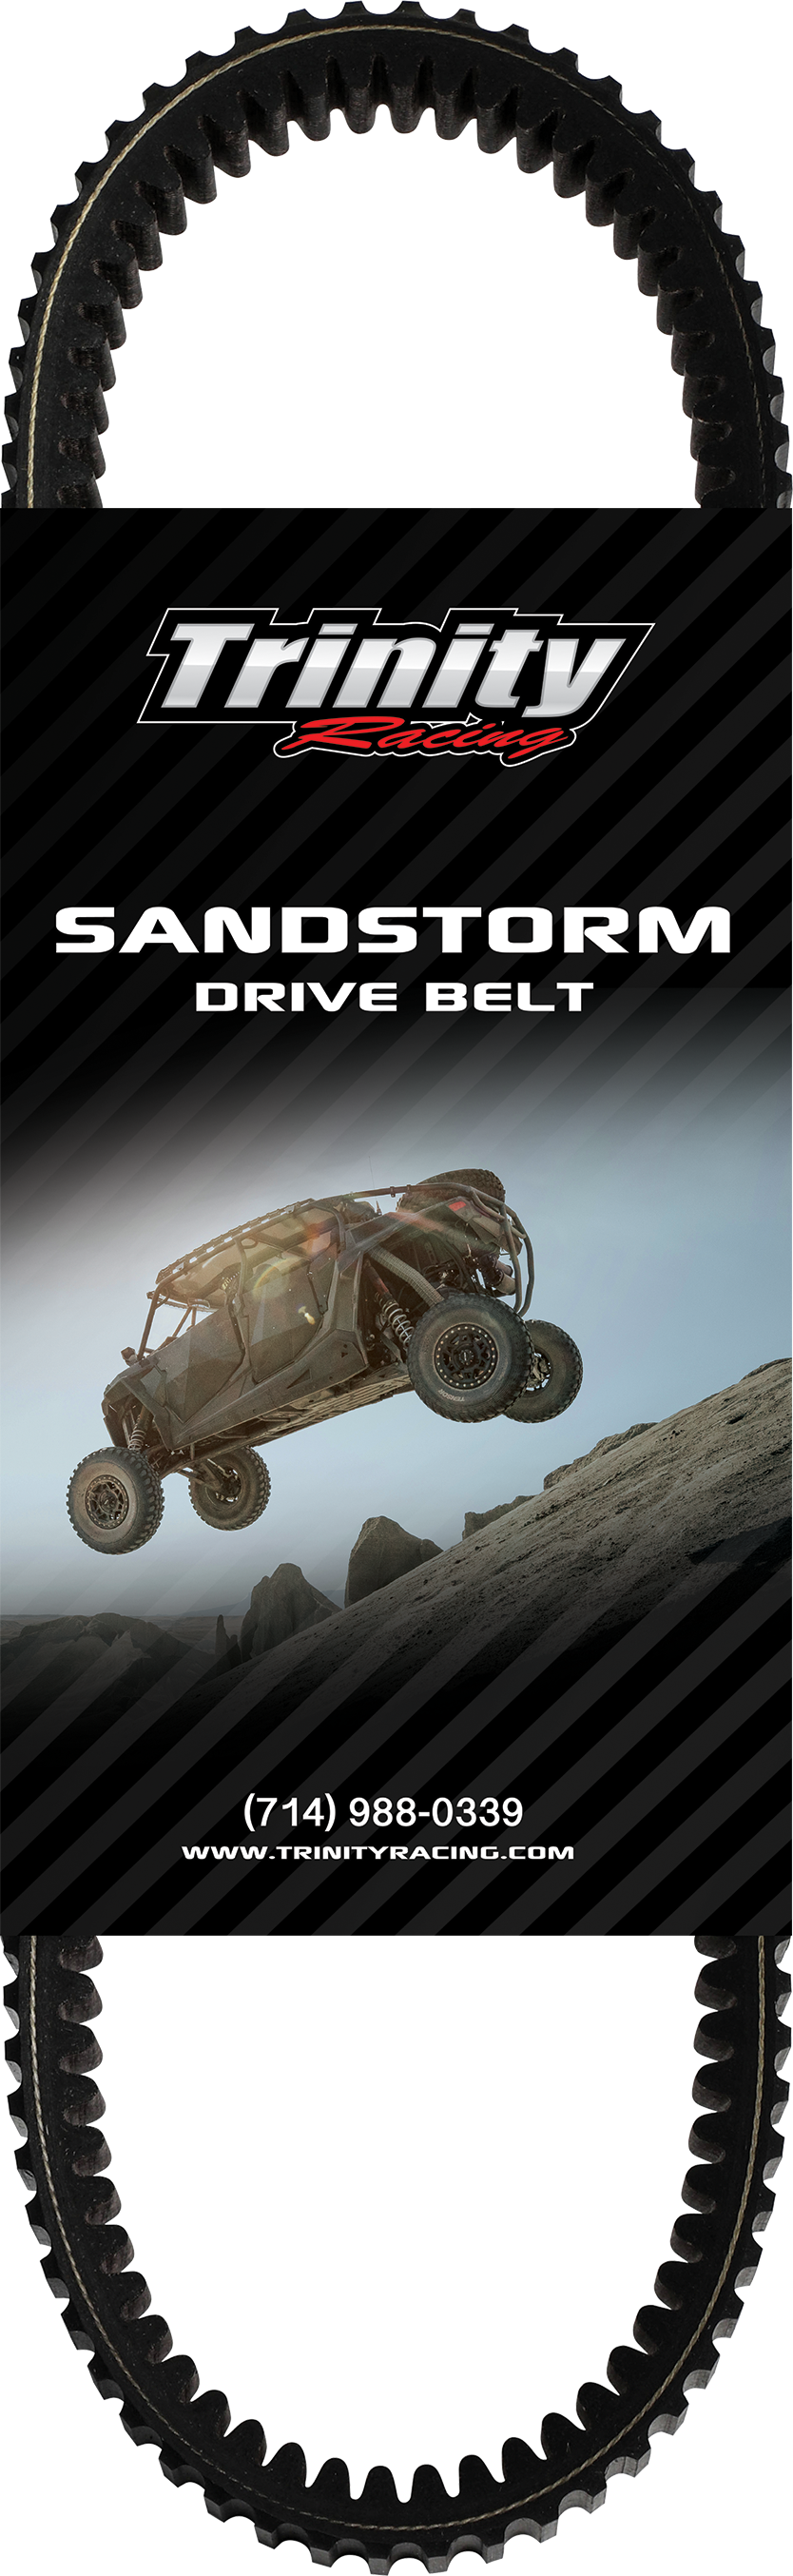 Trinity racing sandstorm drive belt - can-am x3